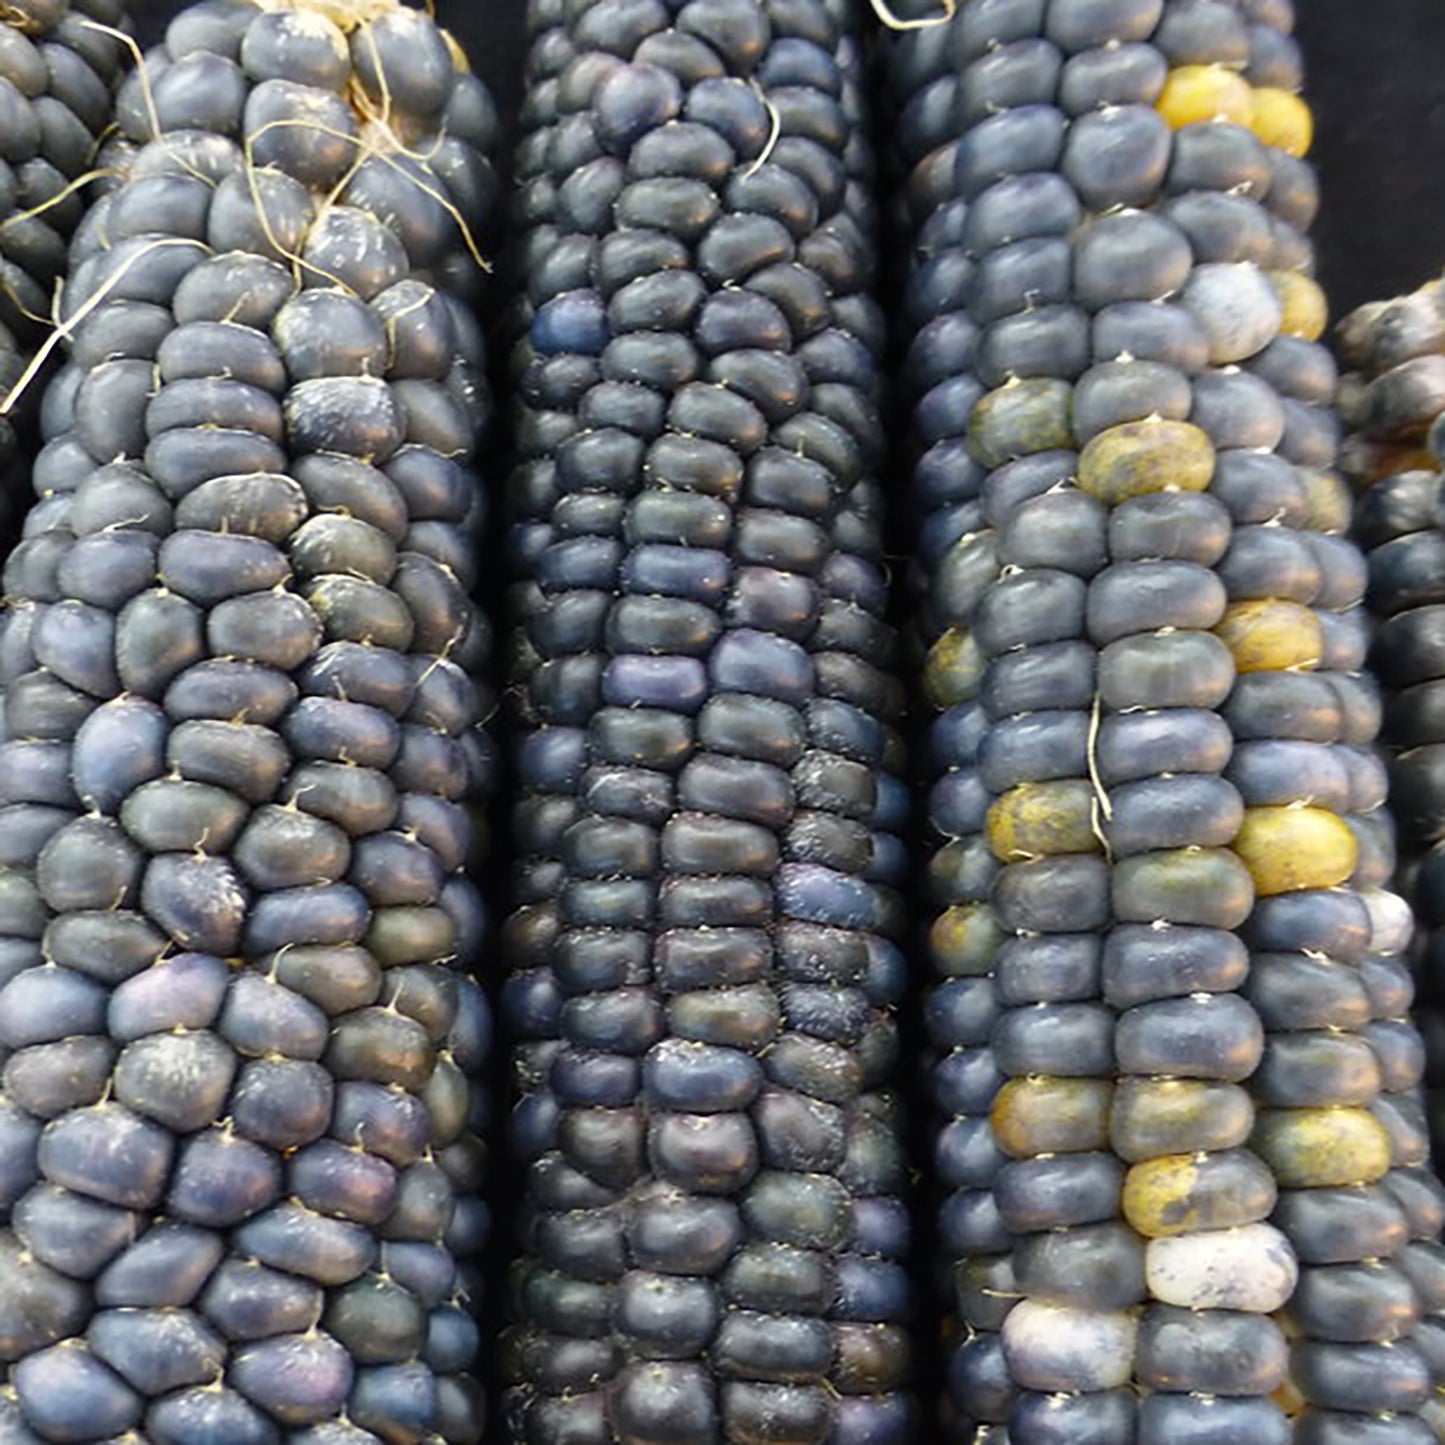 Taos Blue Corn